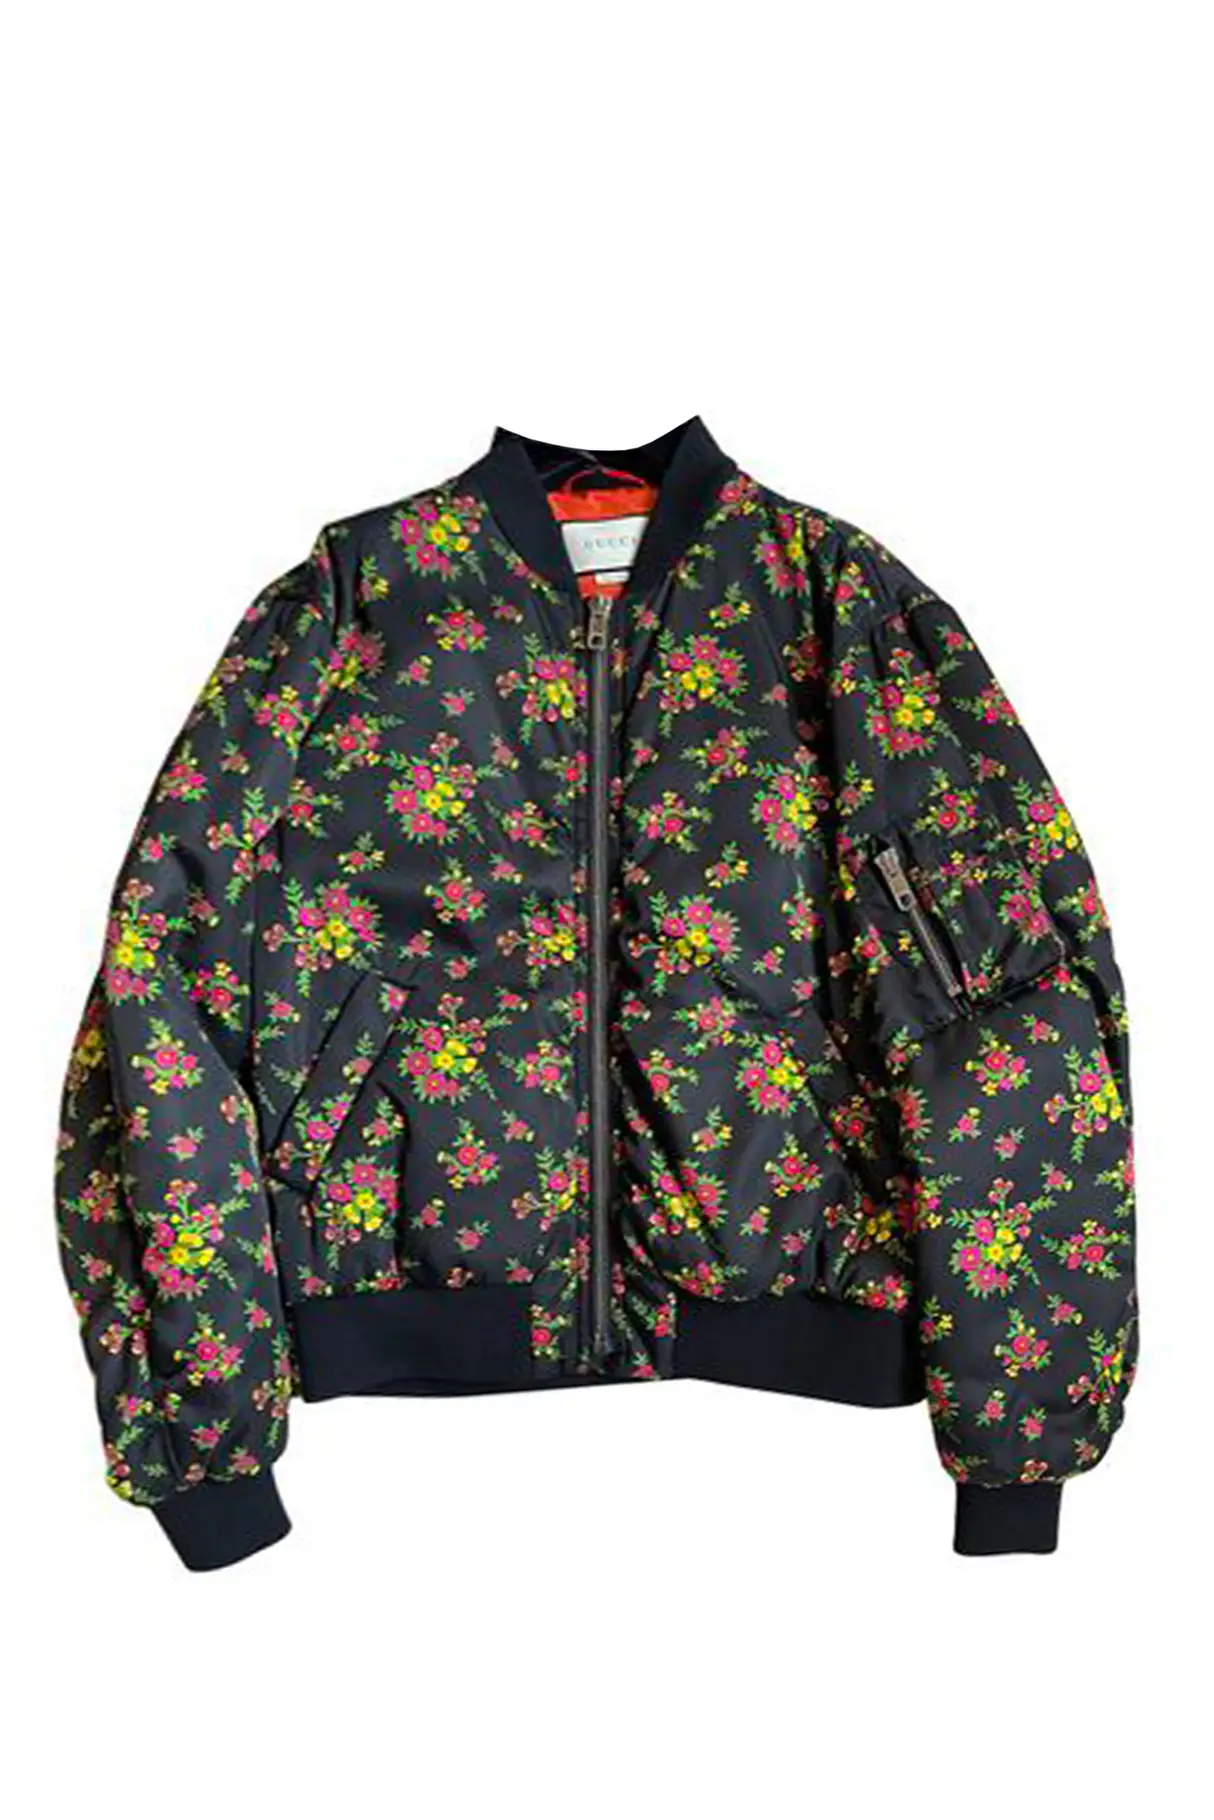 gucci-bomber-coat-multicolored-flowers.jpg